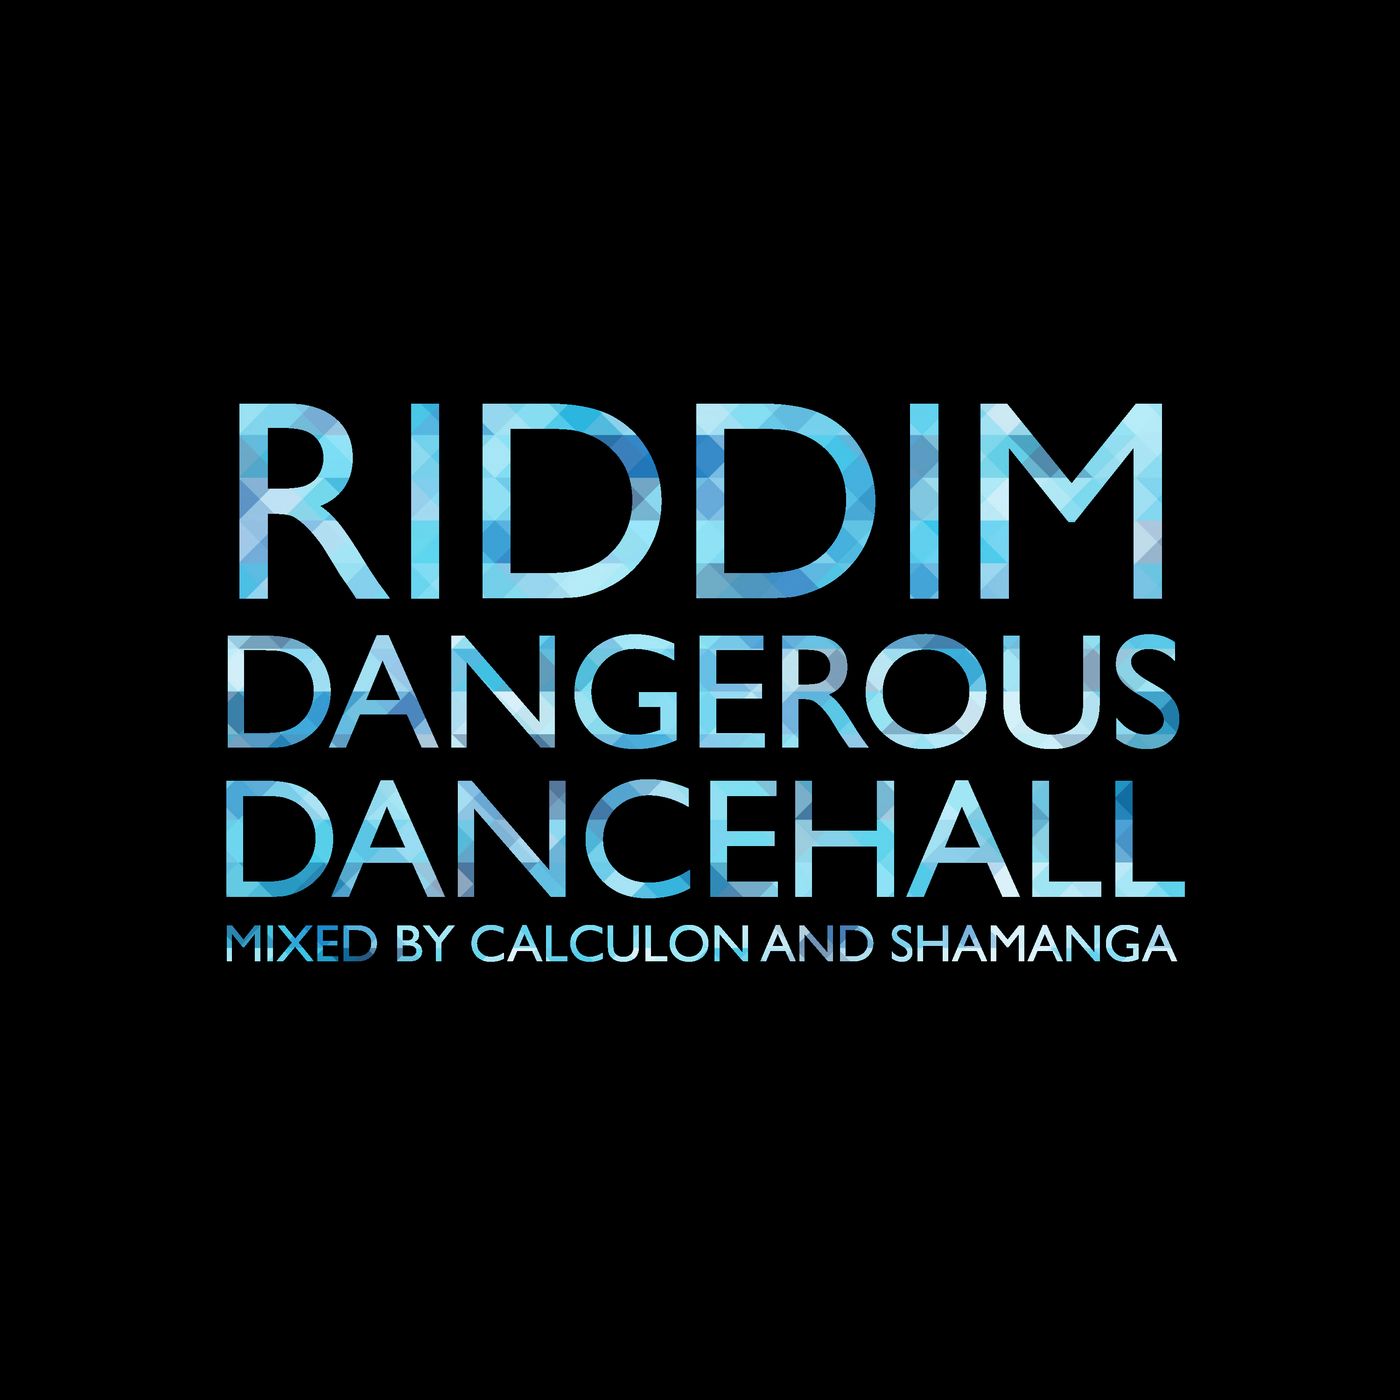 RIDDIM DANGEROUS DANCEHALL